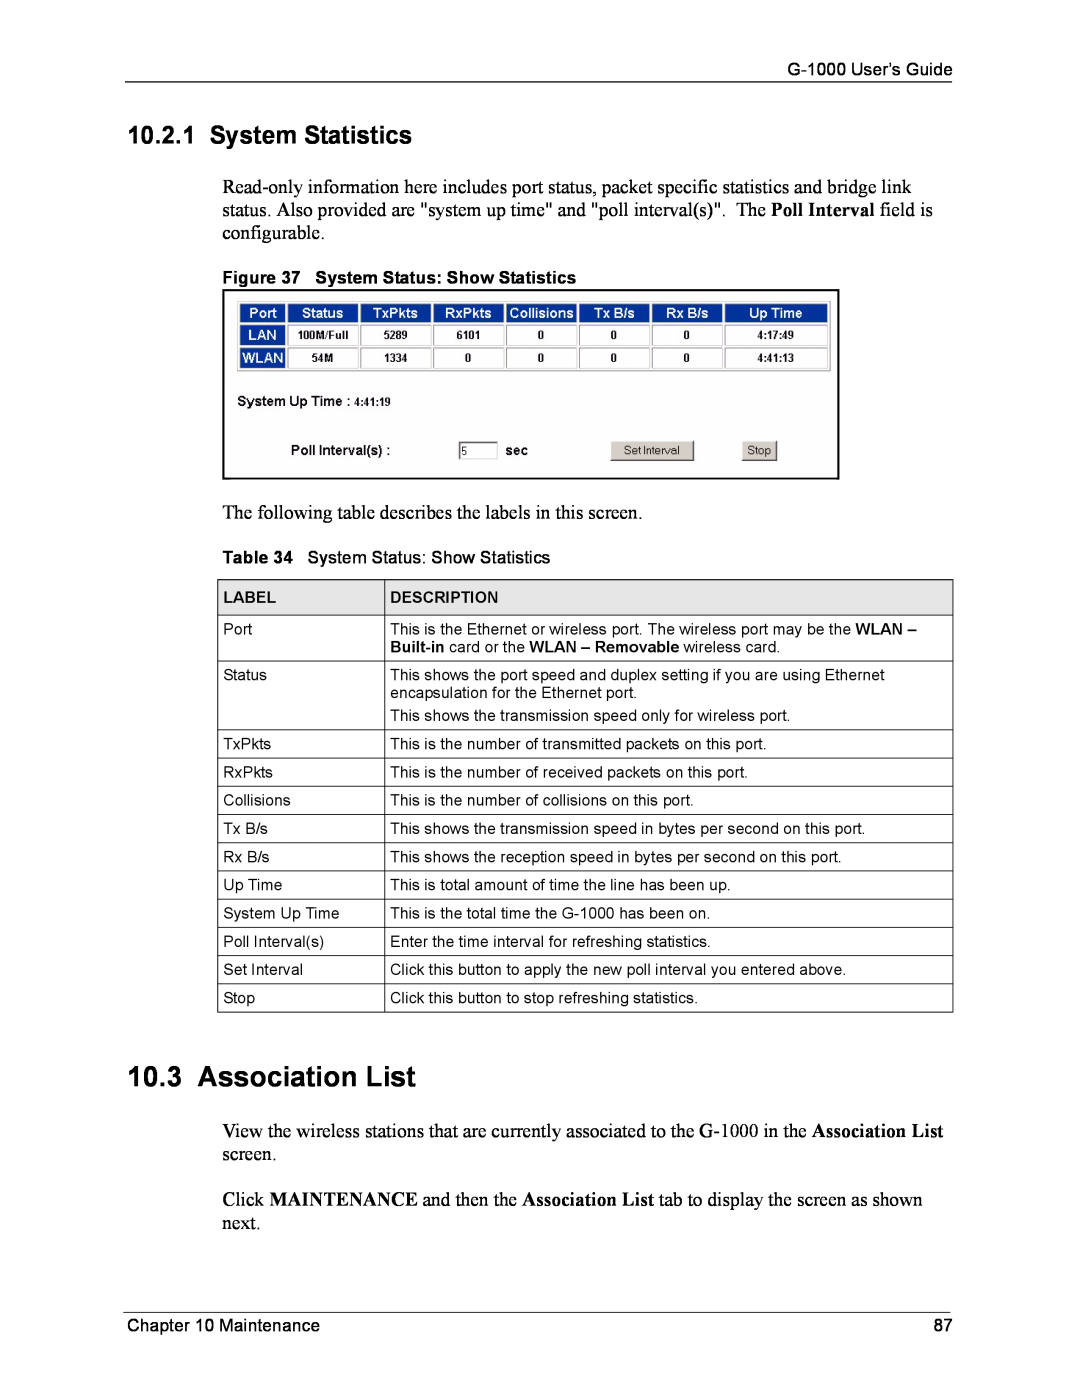 ZyXEL Communications G-1000 manual Association List, System Statistics 